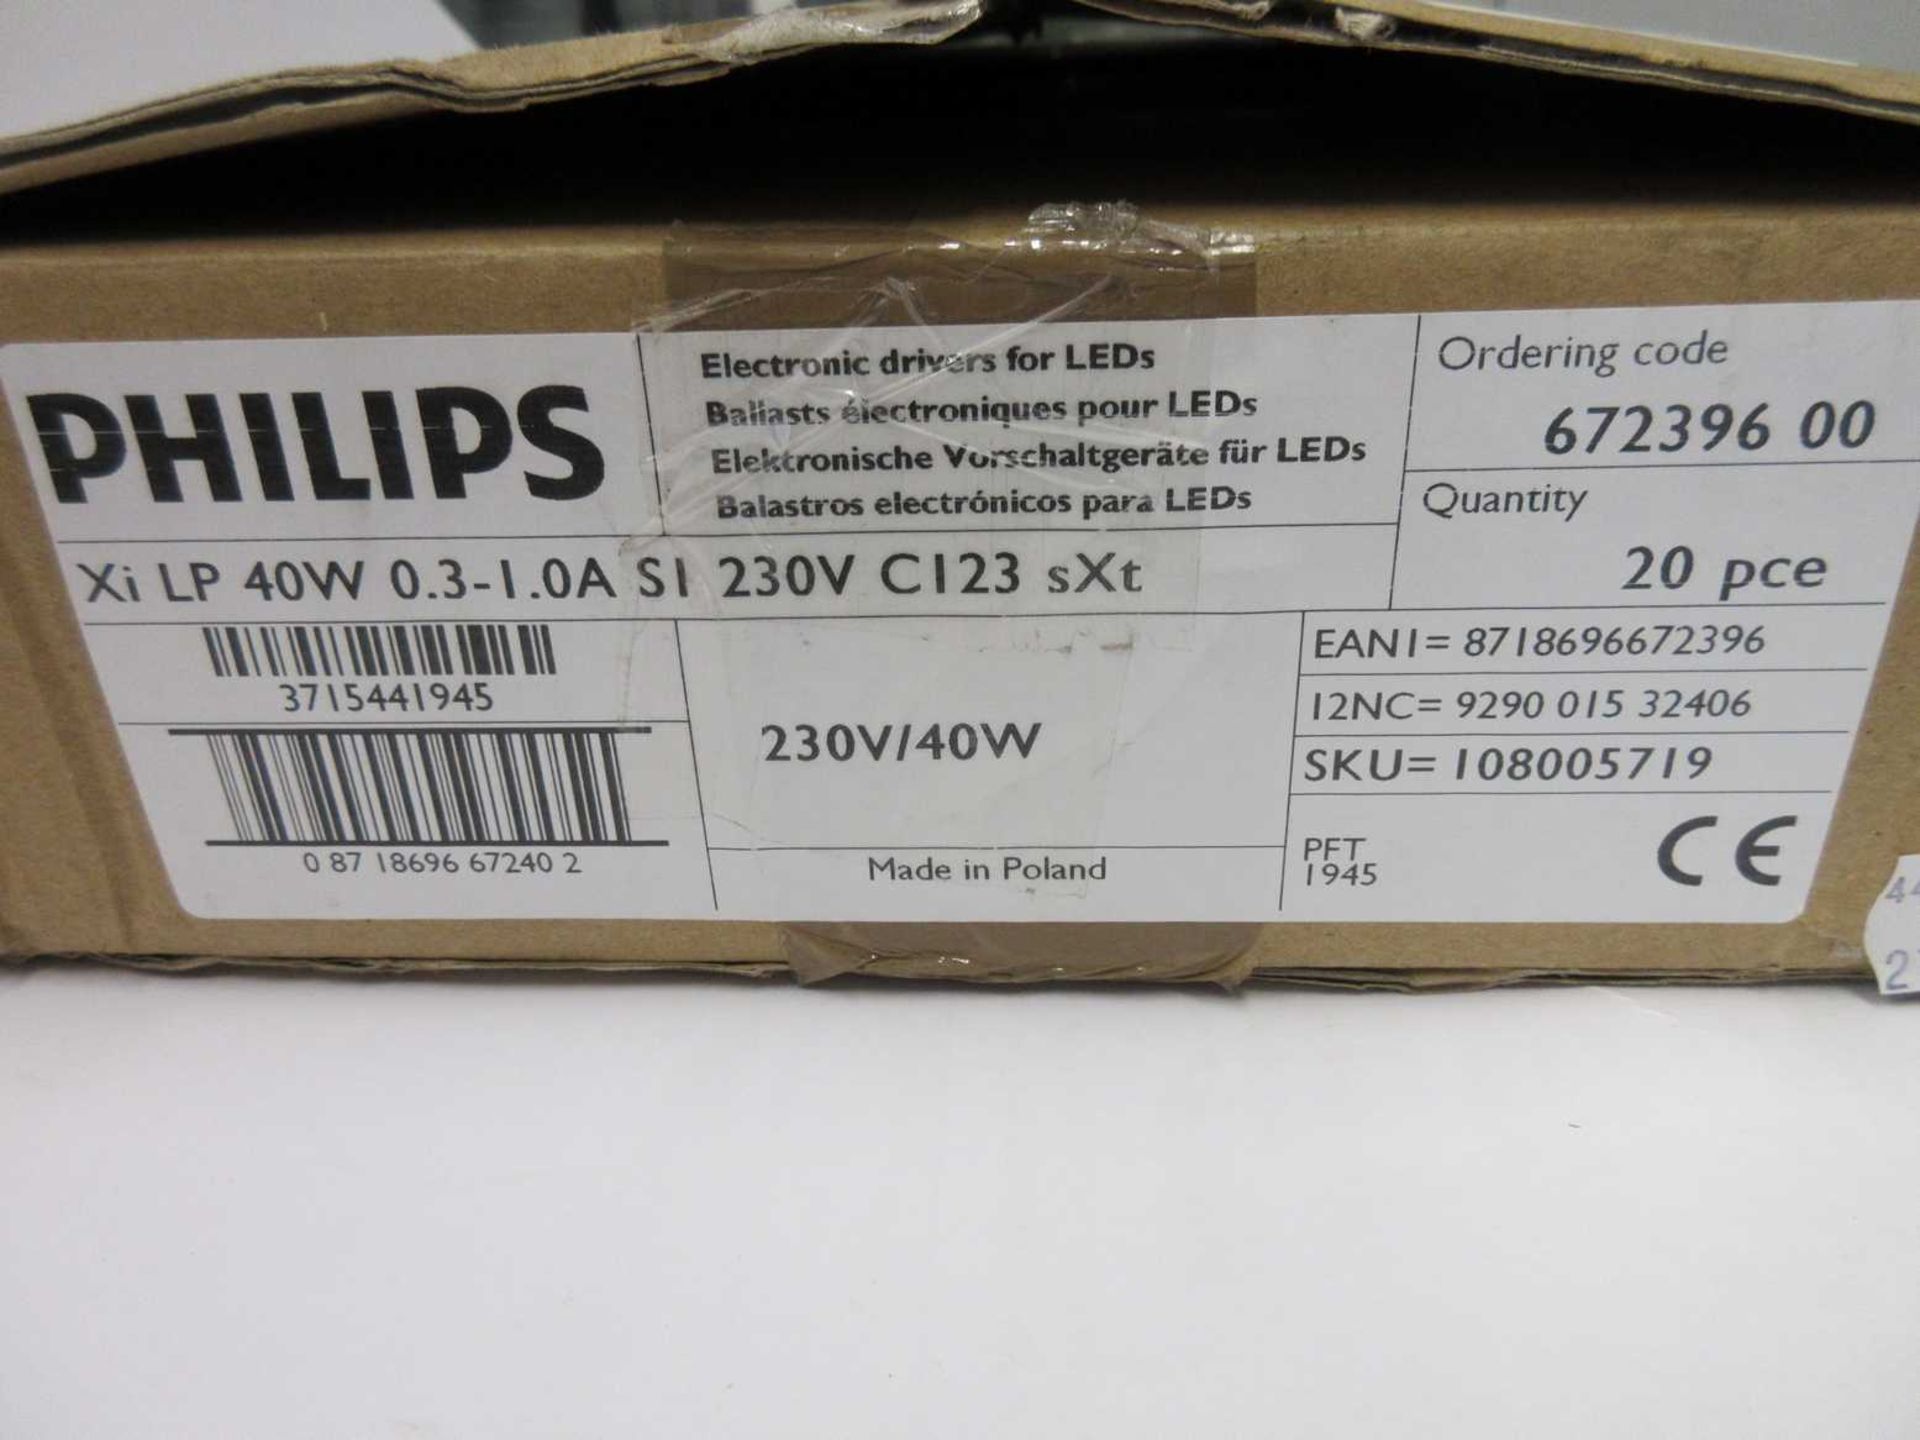 Twenty as new Philips Xitanium 40W 0.3-1.0A S1 230V C123 LED Drivers (Cosmetic damage to box).